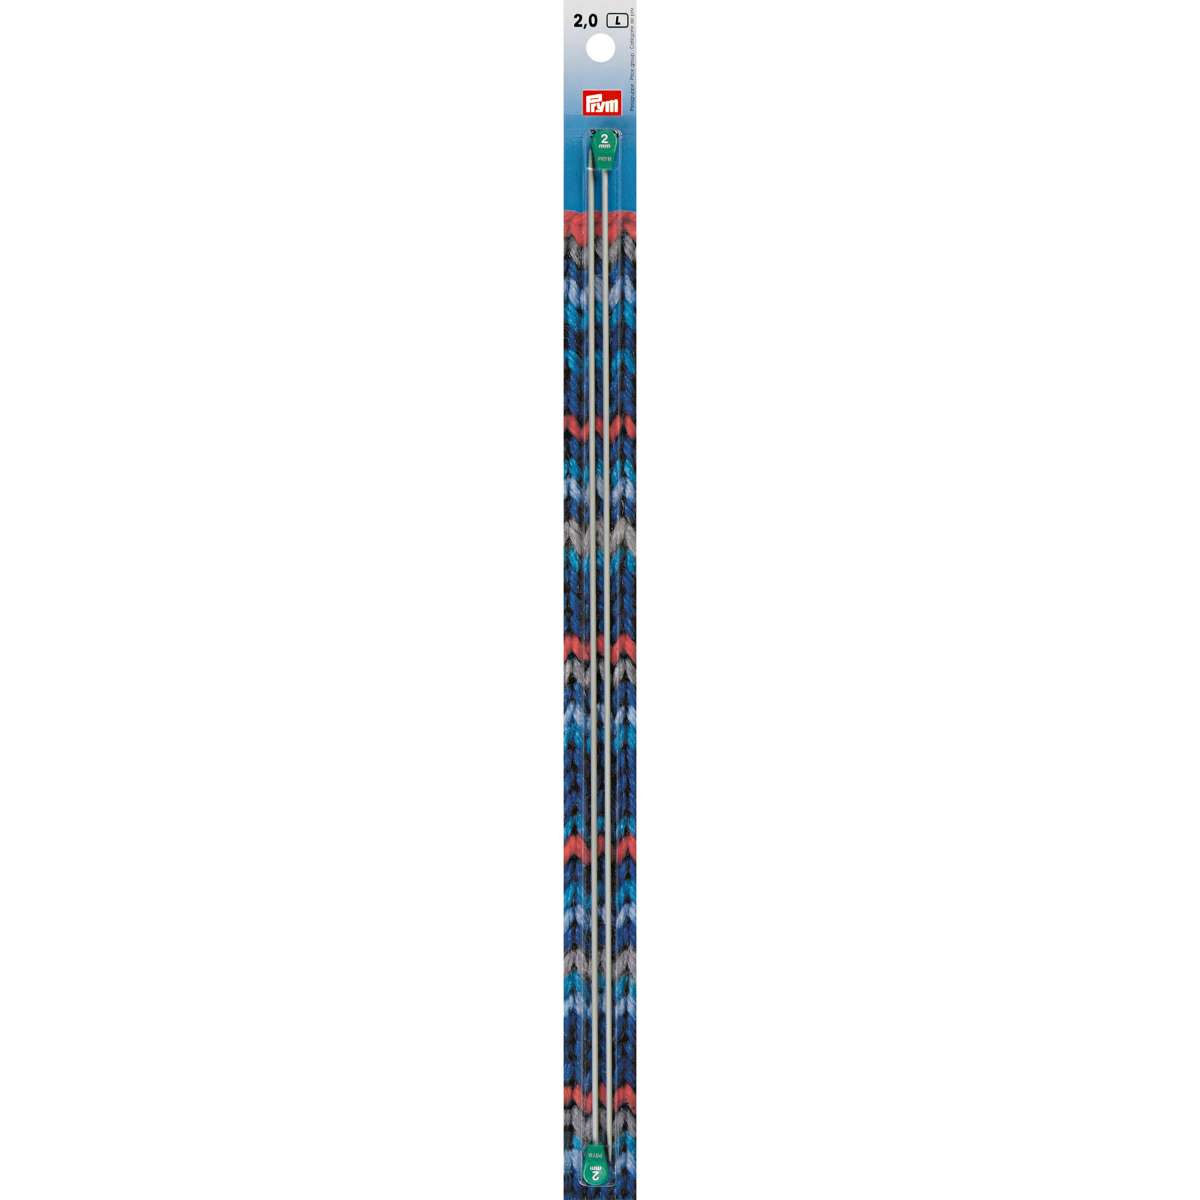 Knitting Needles - 2mm Straight 35cm Long by Prym 191 461